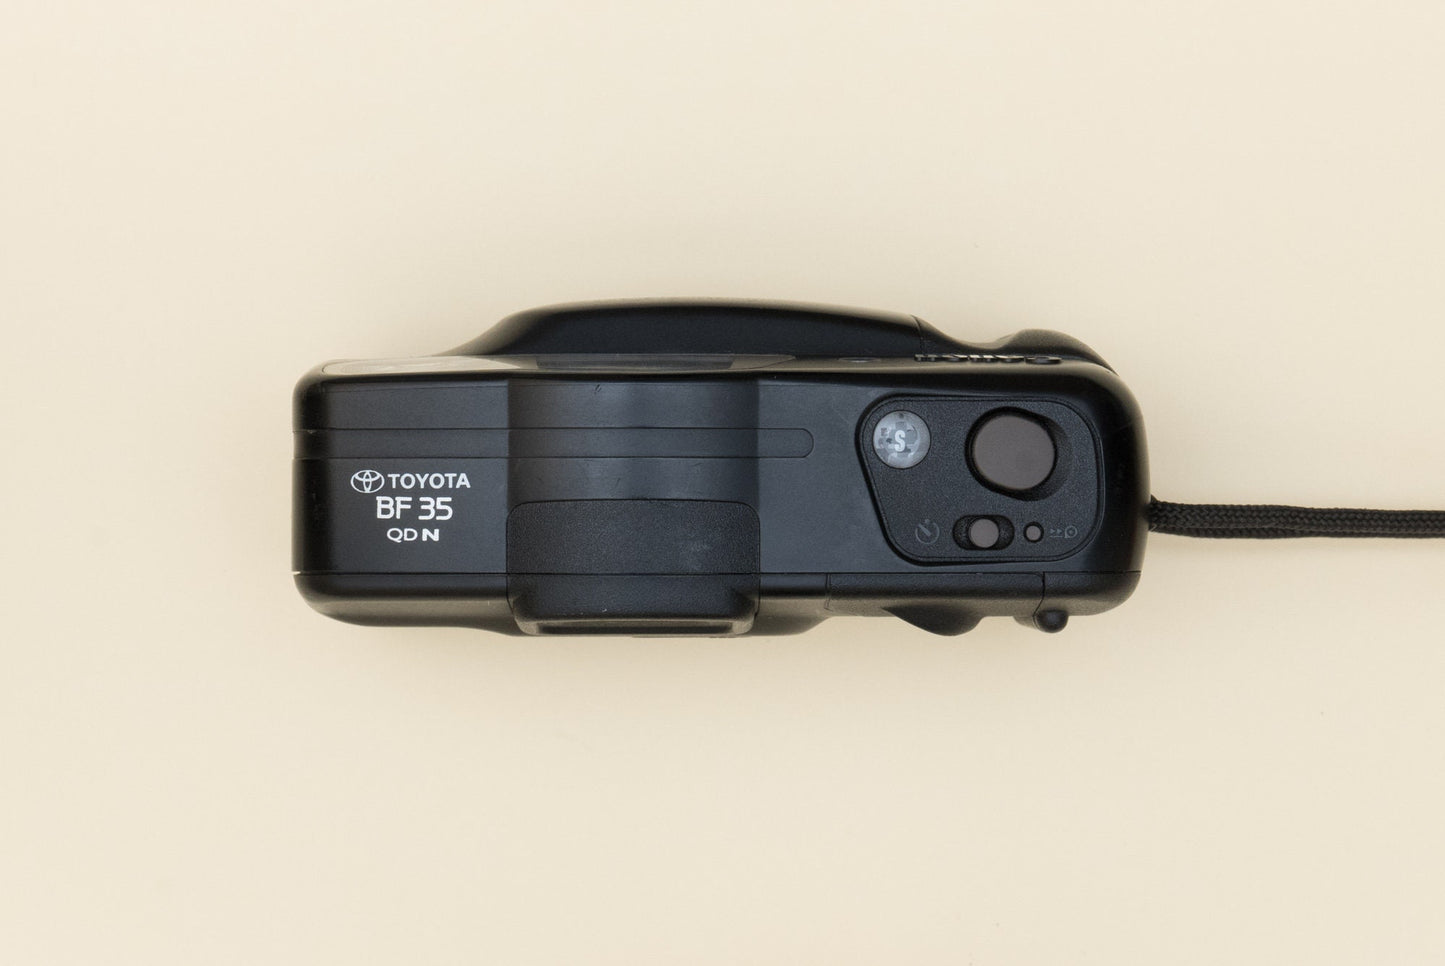 Canon BF 35 QD N Toyota Edition Compact 35mm Film Camera